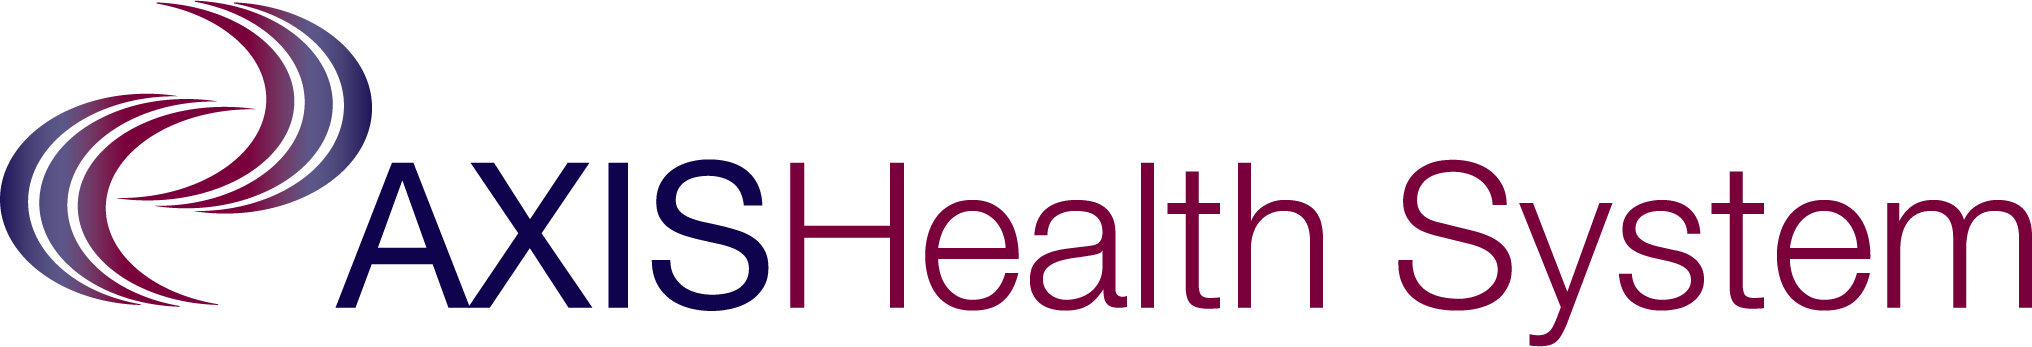 Axis Health System logo